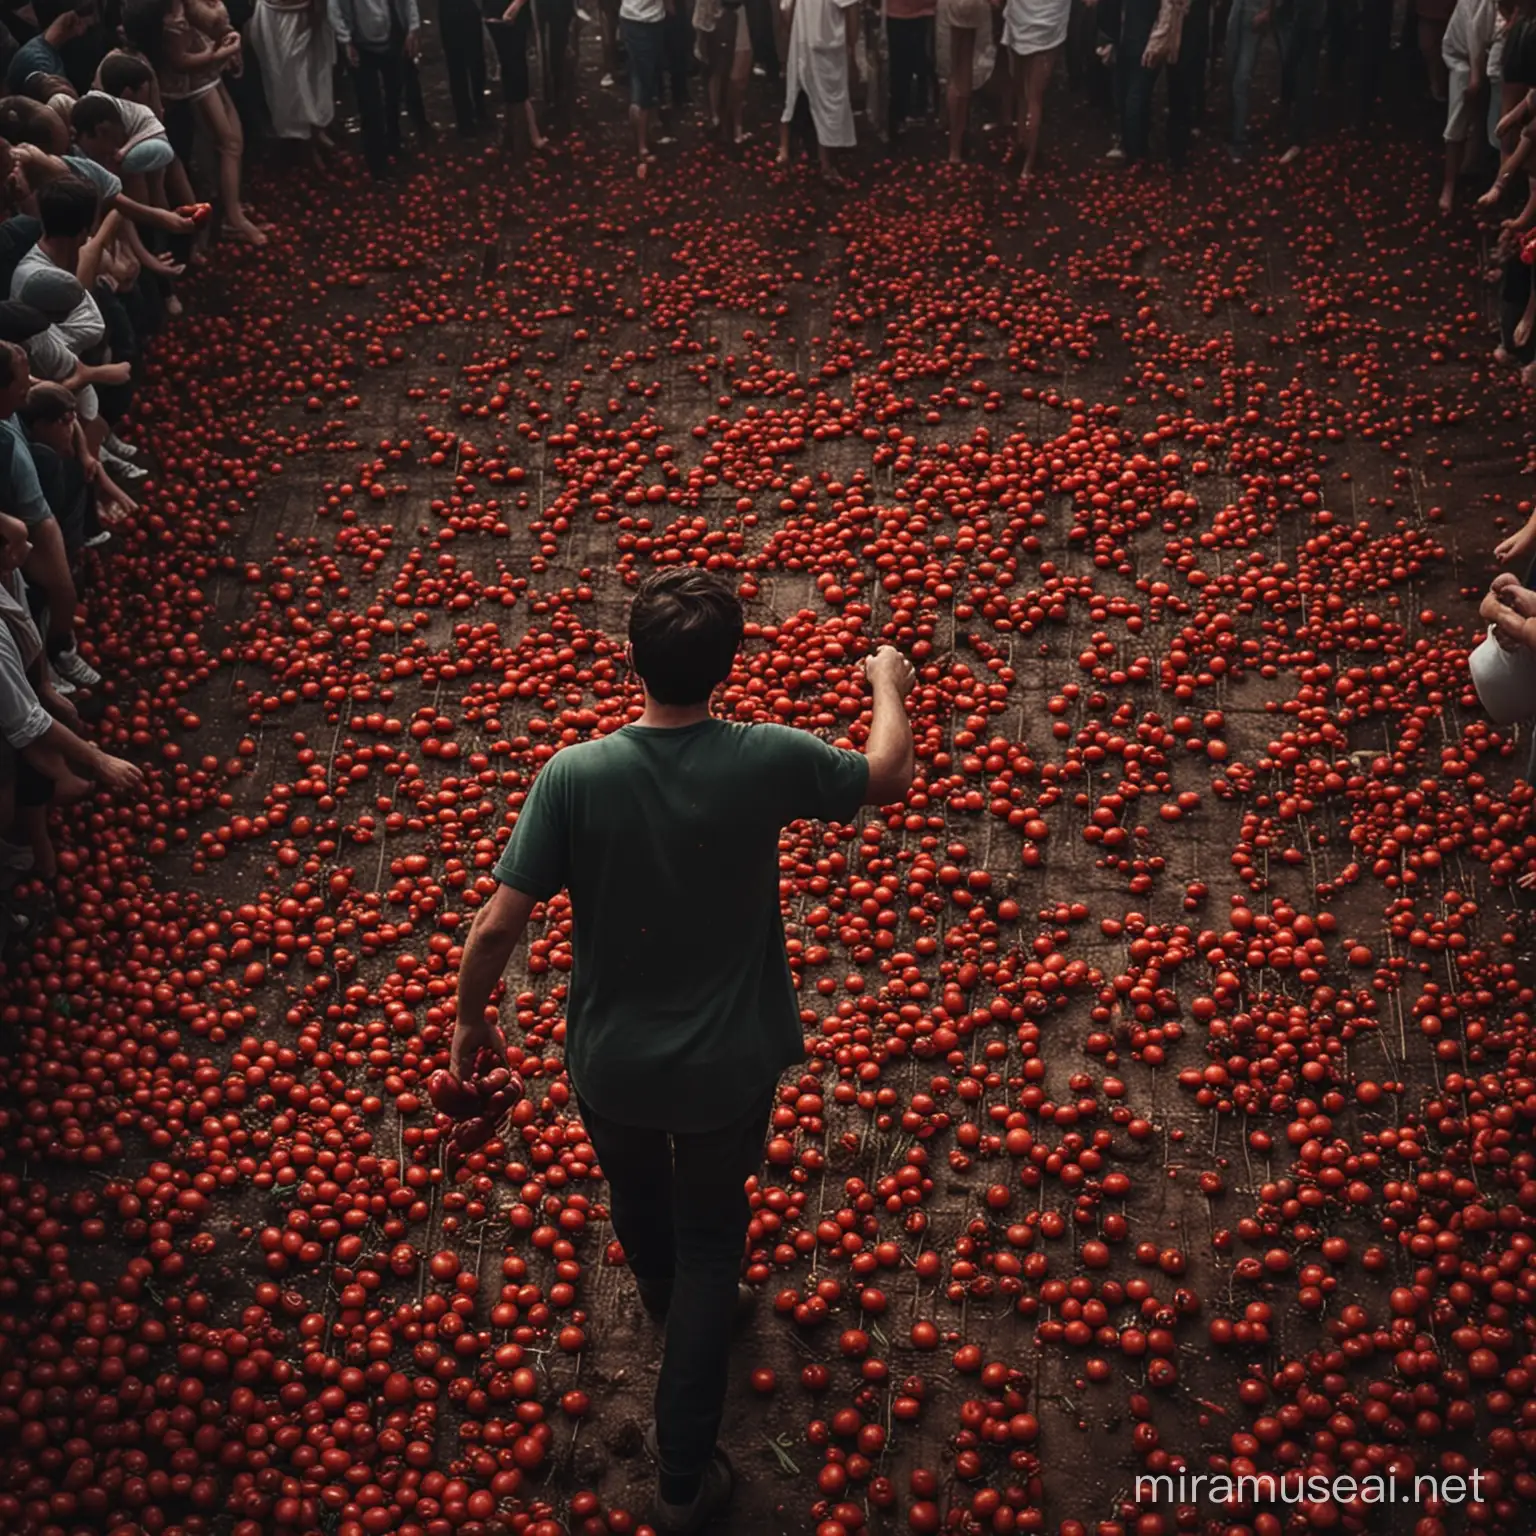 Vibrant Tomato Festival Scene Participants Engaged in Tomato Throwing